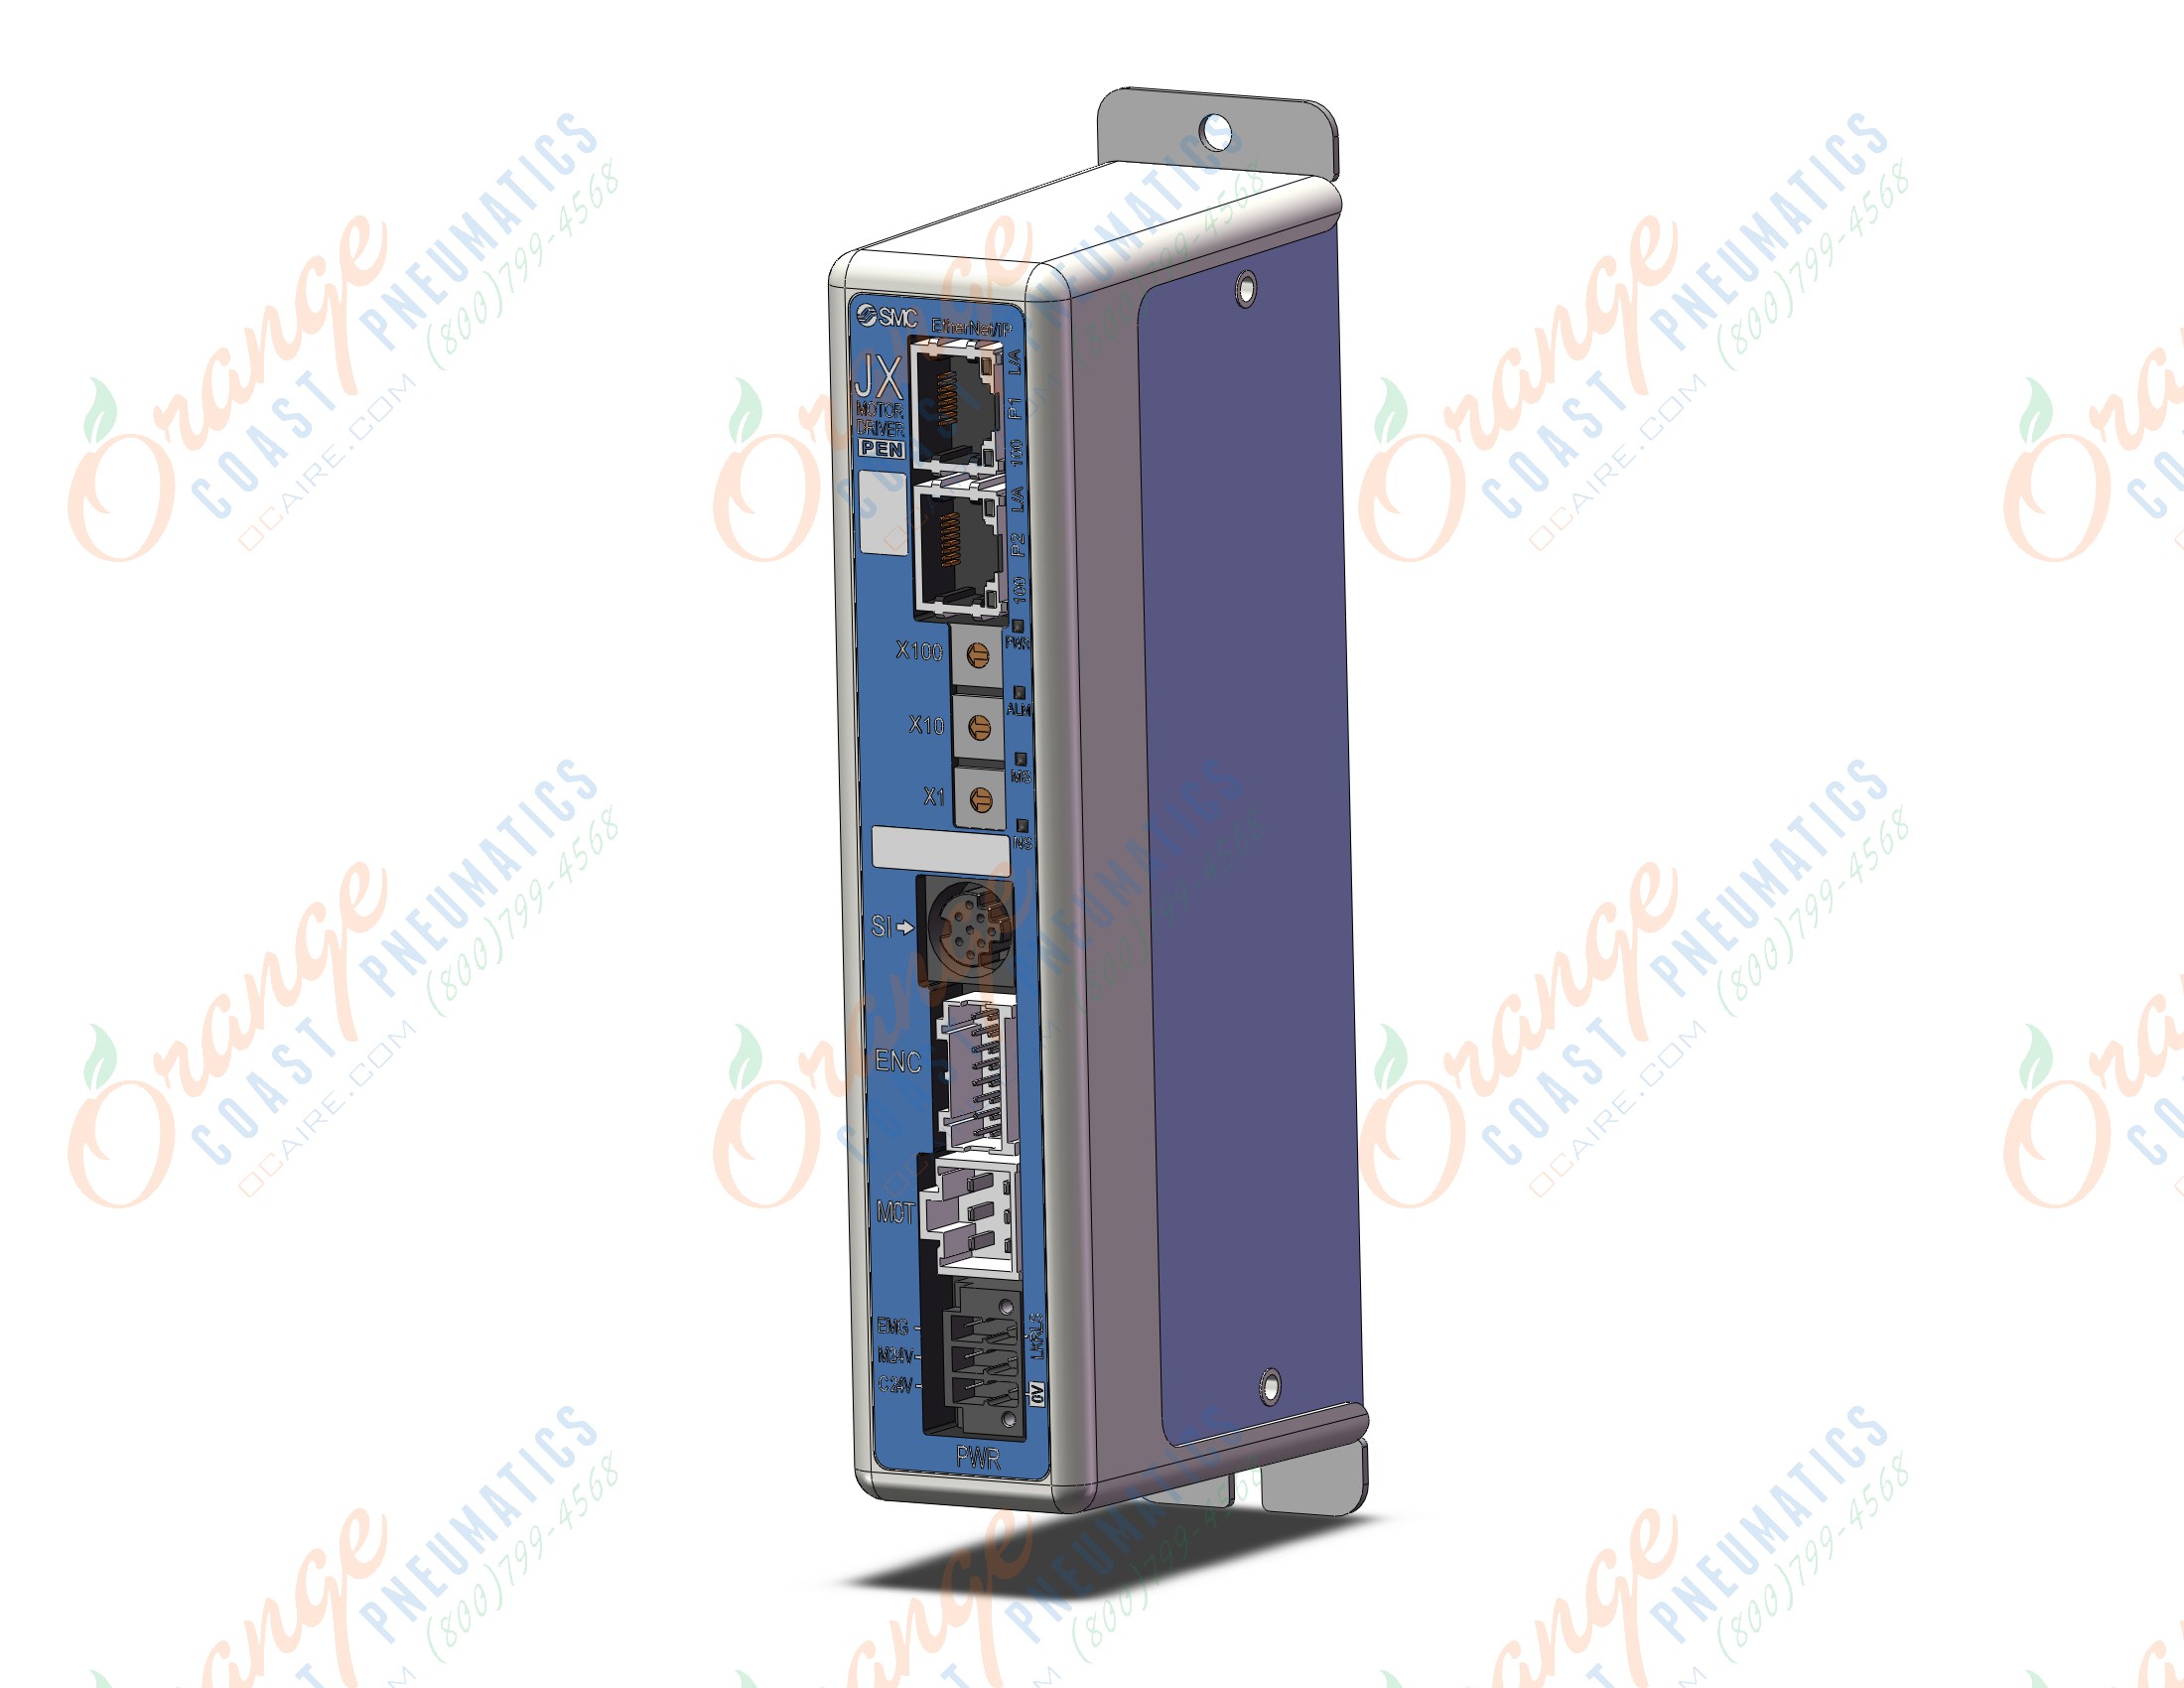 SMC JXC917-LEFSH16A-300 ethernet/ip direct connect, ELECTRIC ACTUATOR CONTROLLER